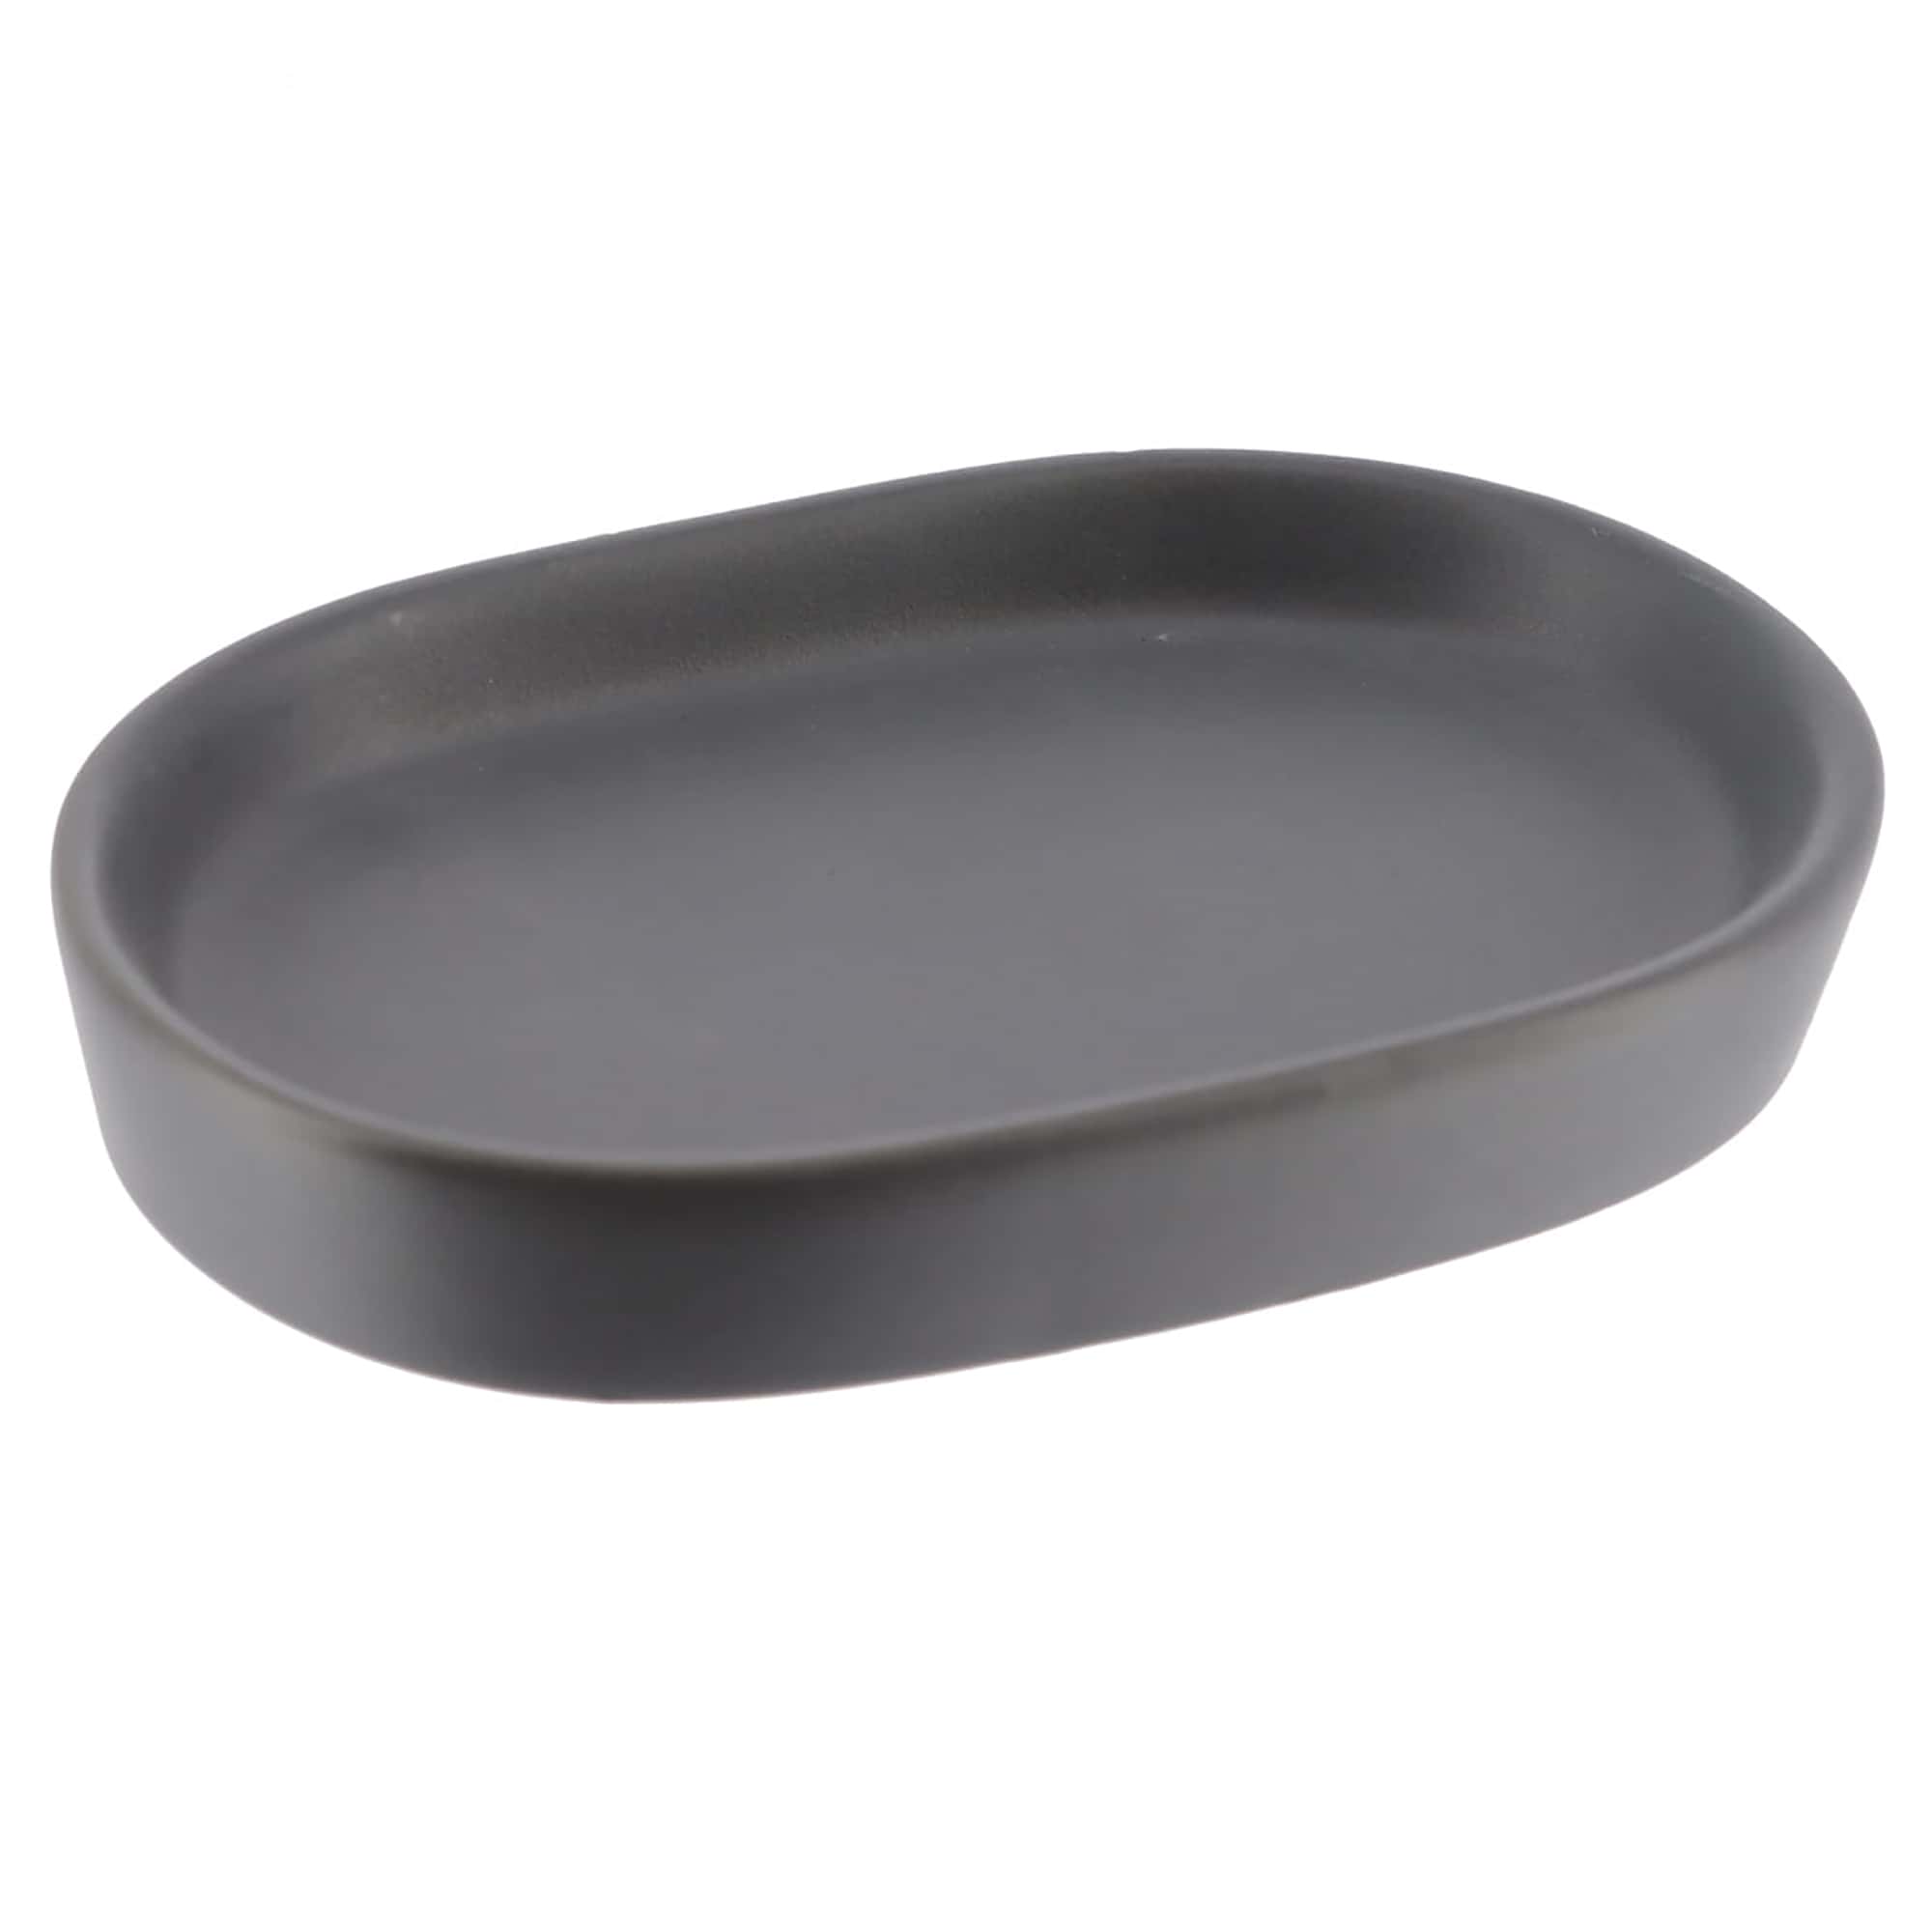 Stoneware Soap Dish Cup in Gray